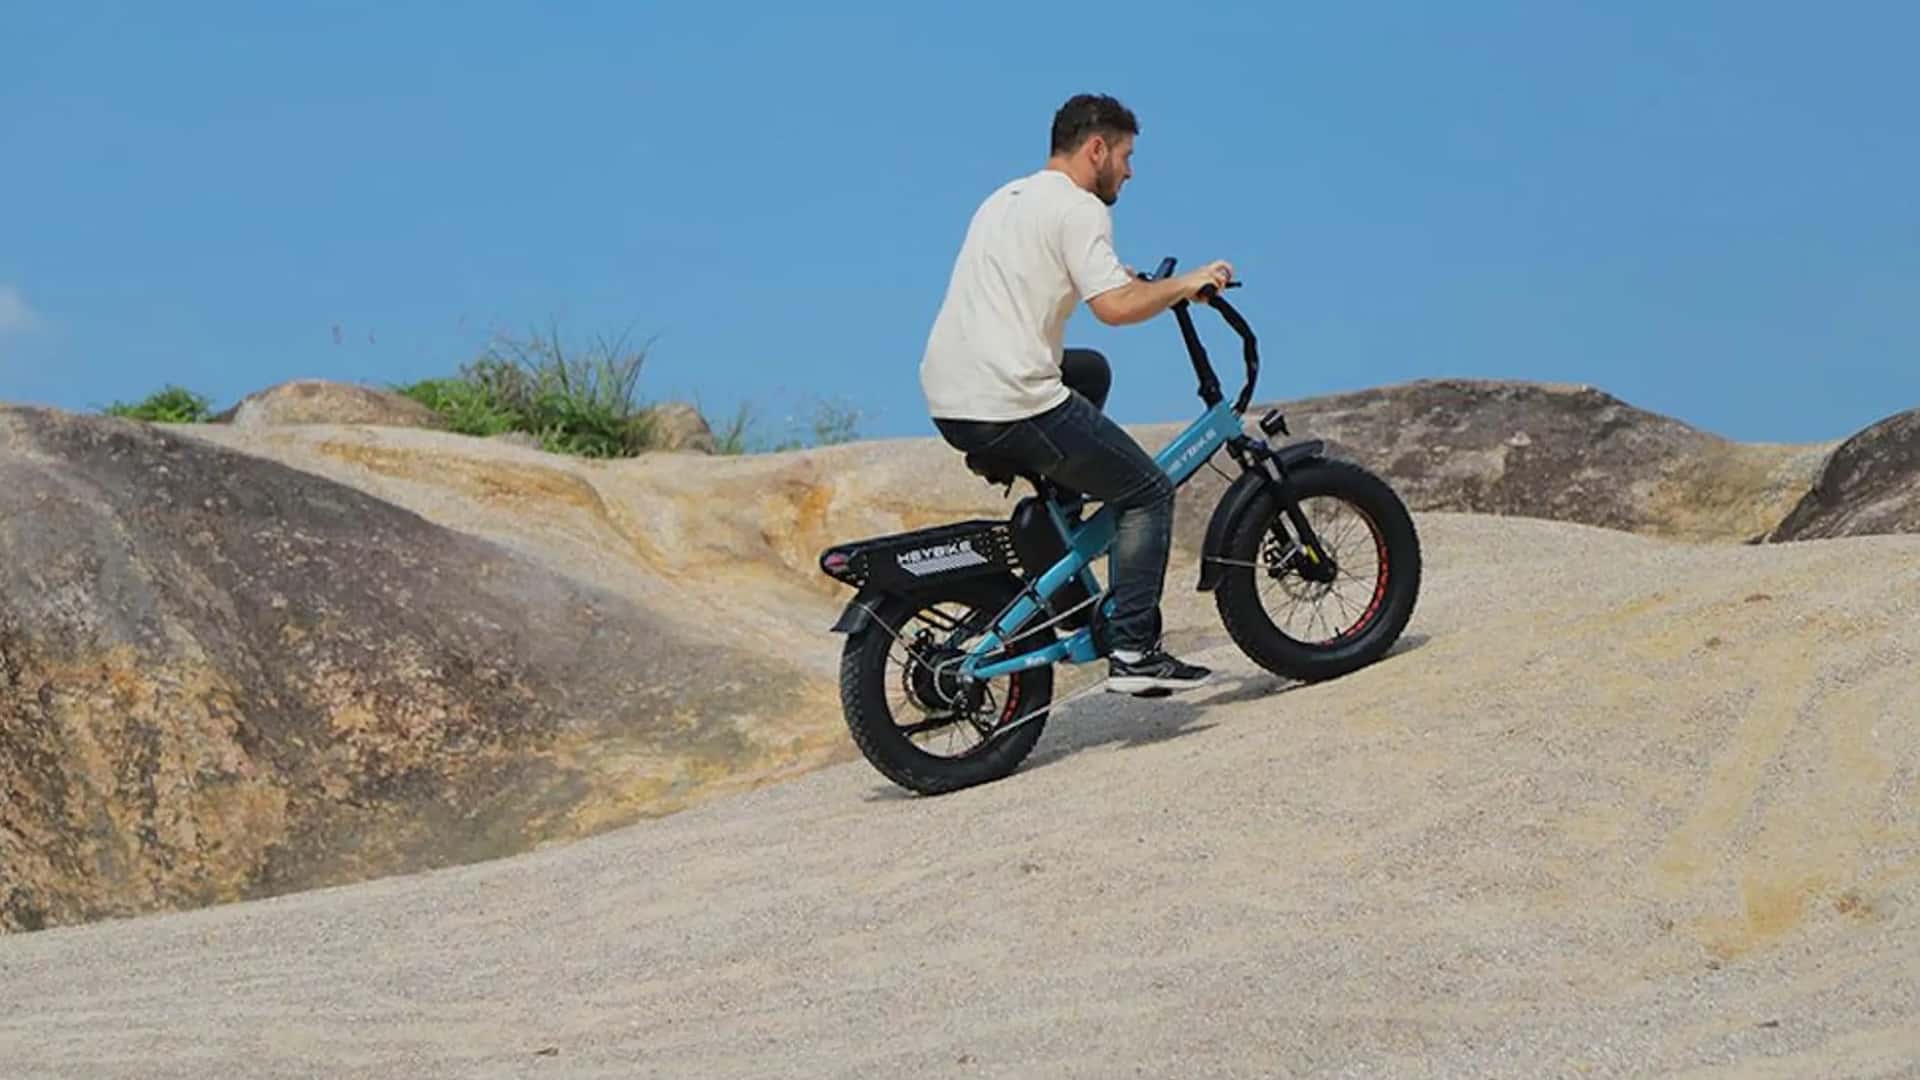 new heybike mars 2.0 promises practicality and go-anywhere fun